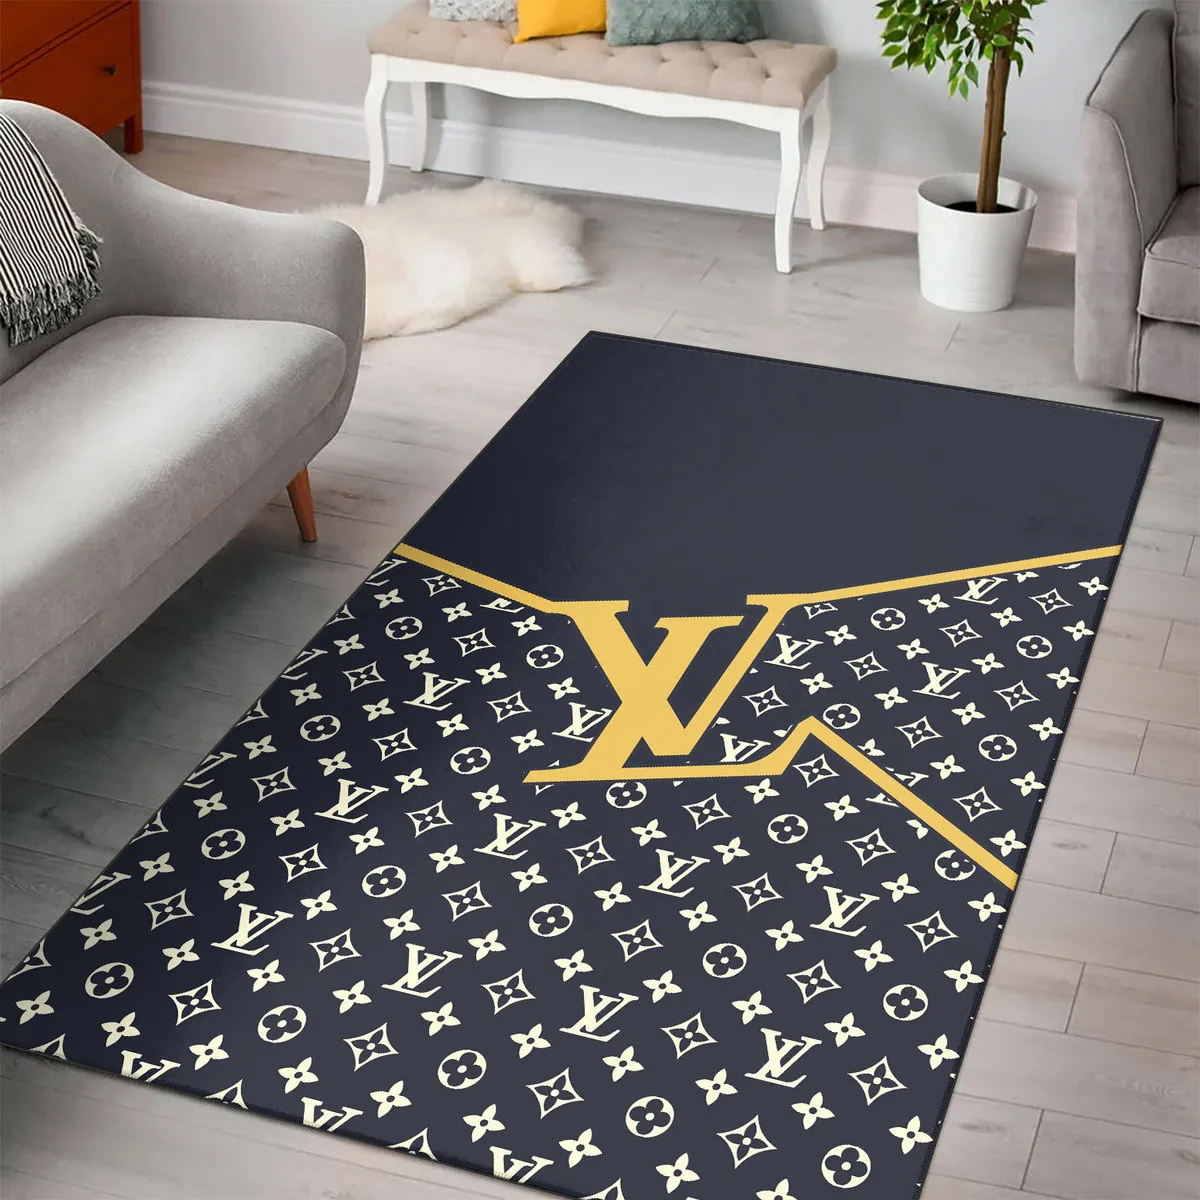 Louis Vuitton Black Yellow Rectangle Rug Home Decor Luxury Area Carpet Door Mat Fashion Brand